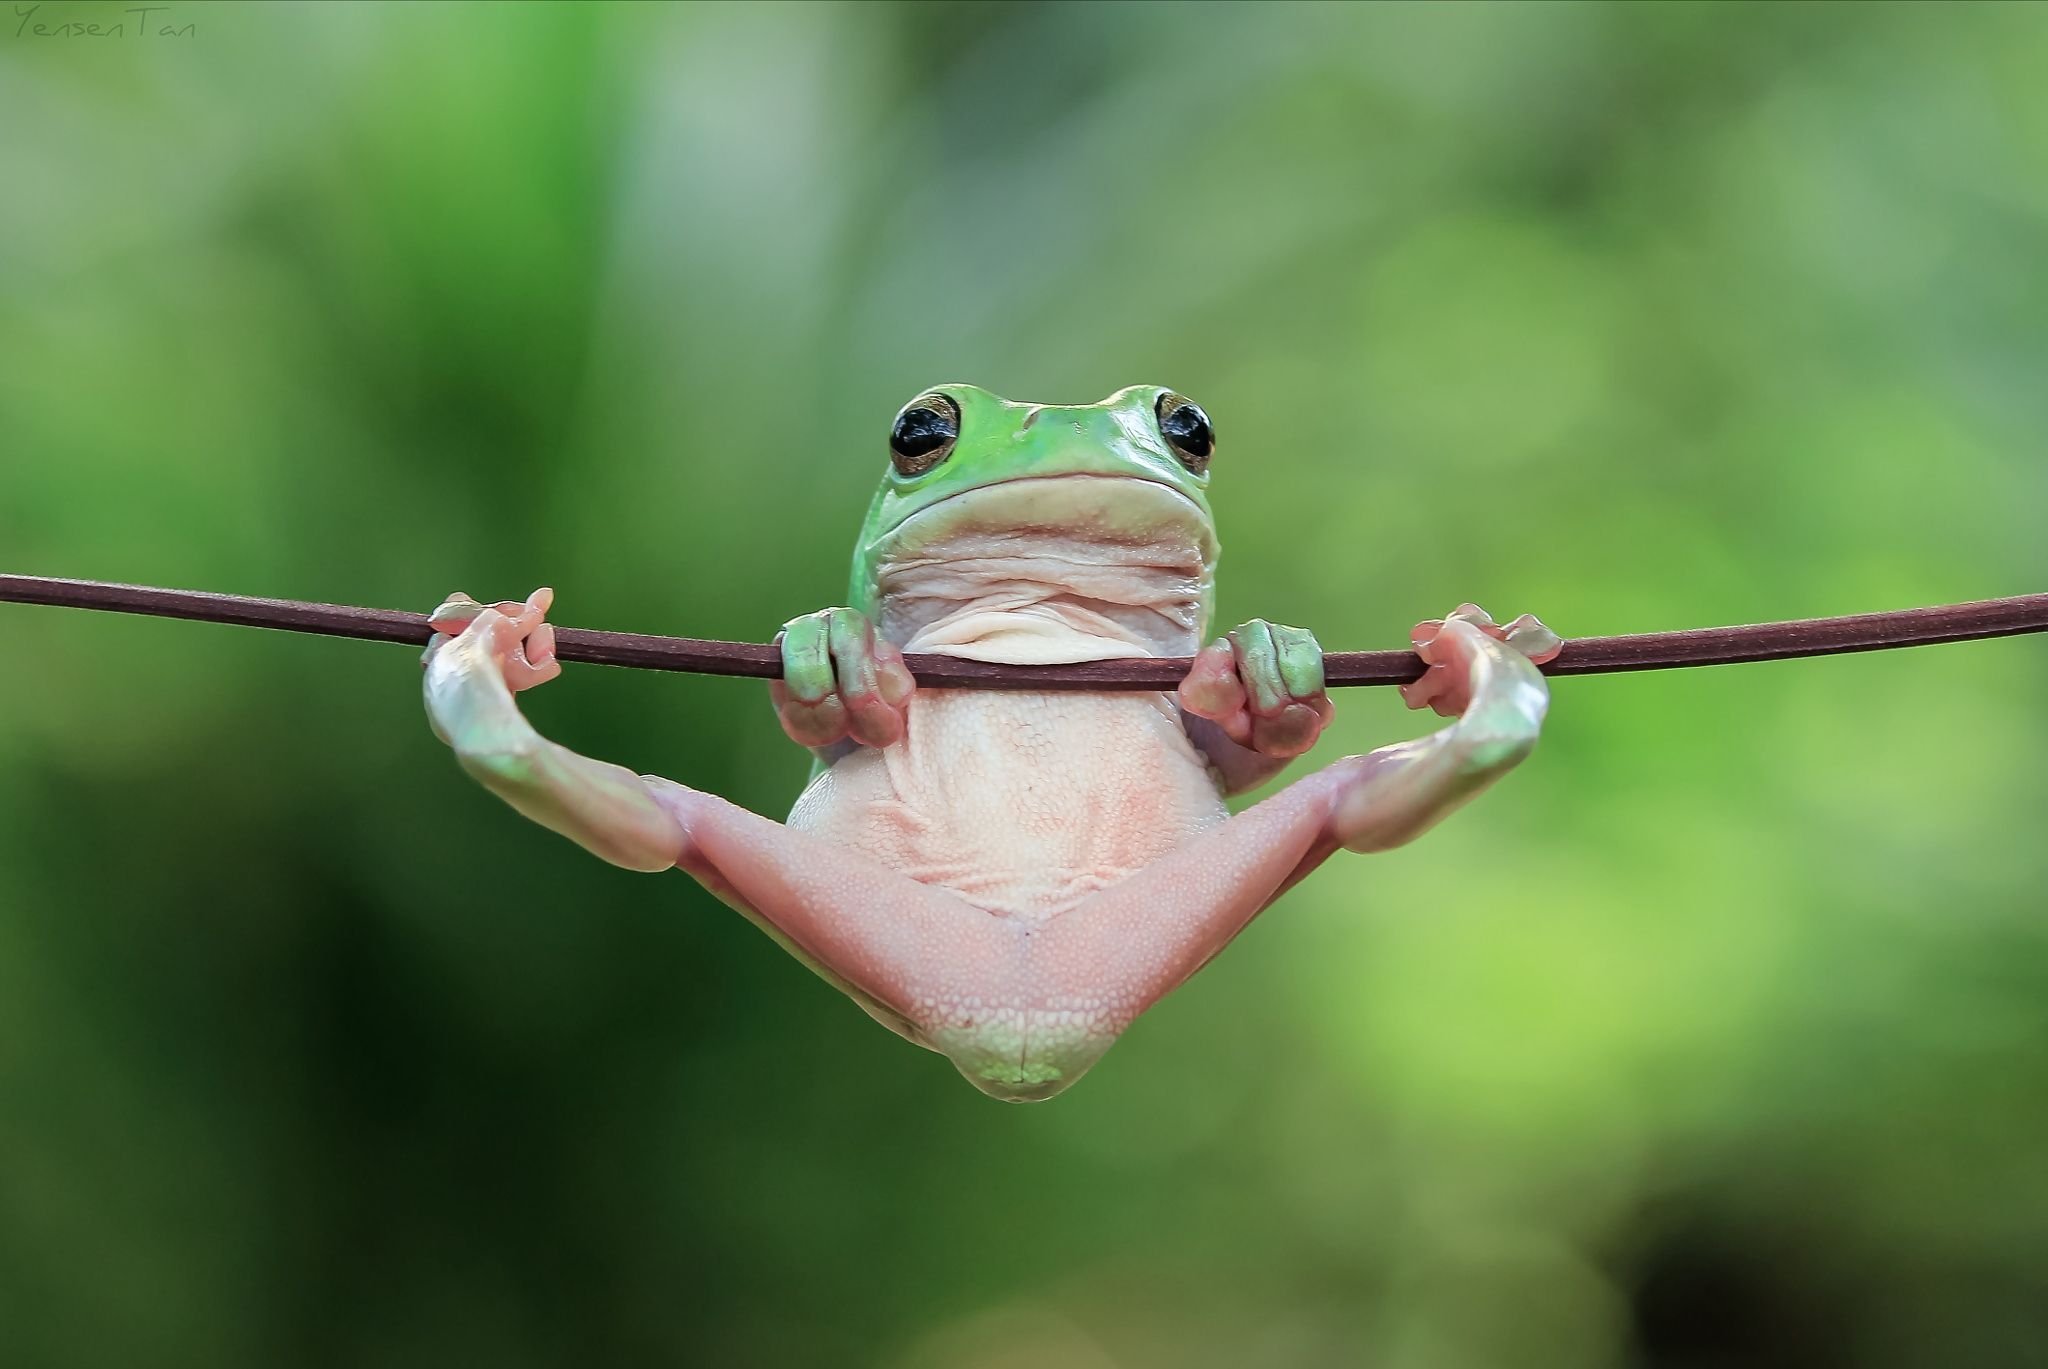 Смешные лягушки картинки. Танто Йенсен. Танто Йенсен — индонезийский фотограф. Смешные лягушки. Нанолягушка.